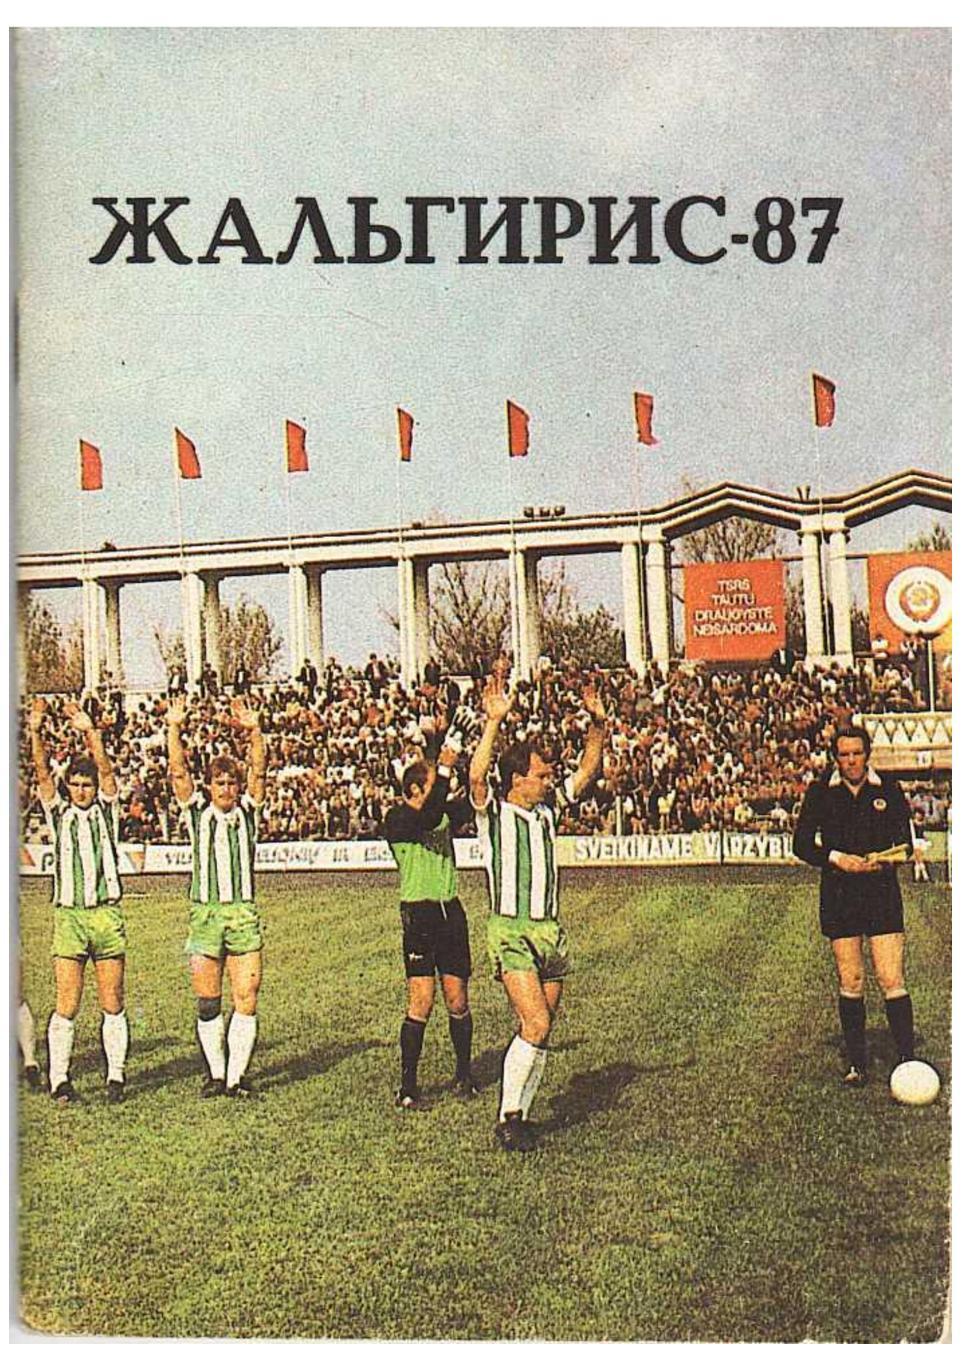 Жальгирис–87. Программа чемпионата СССР по футболу. Вильнюс, 1987.